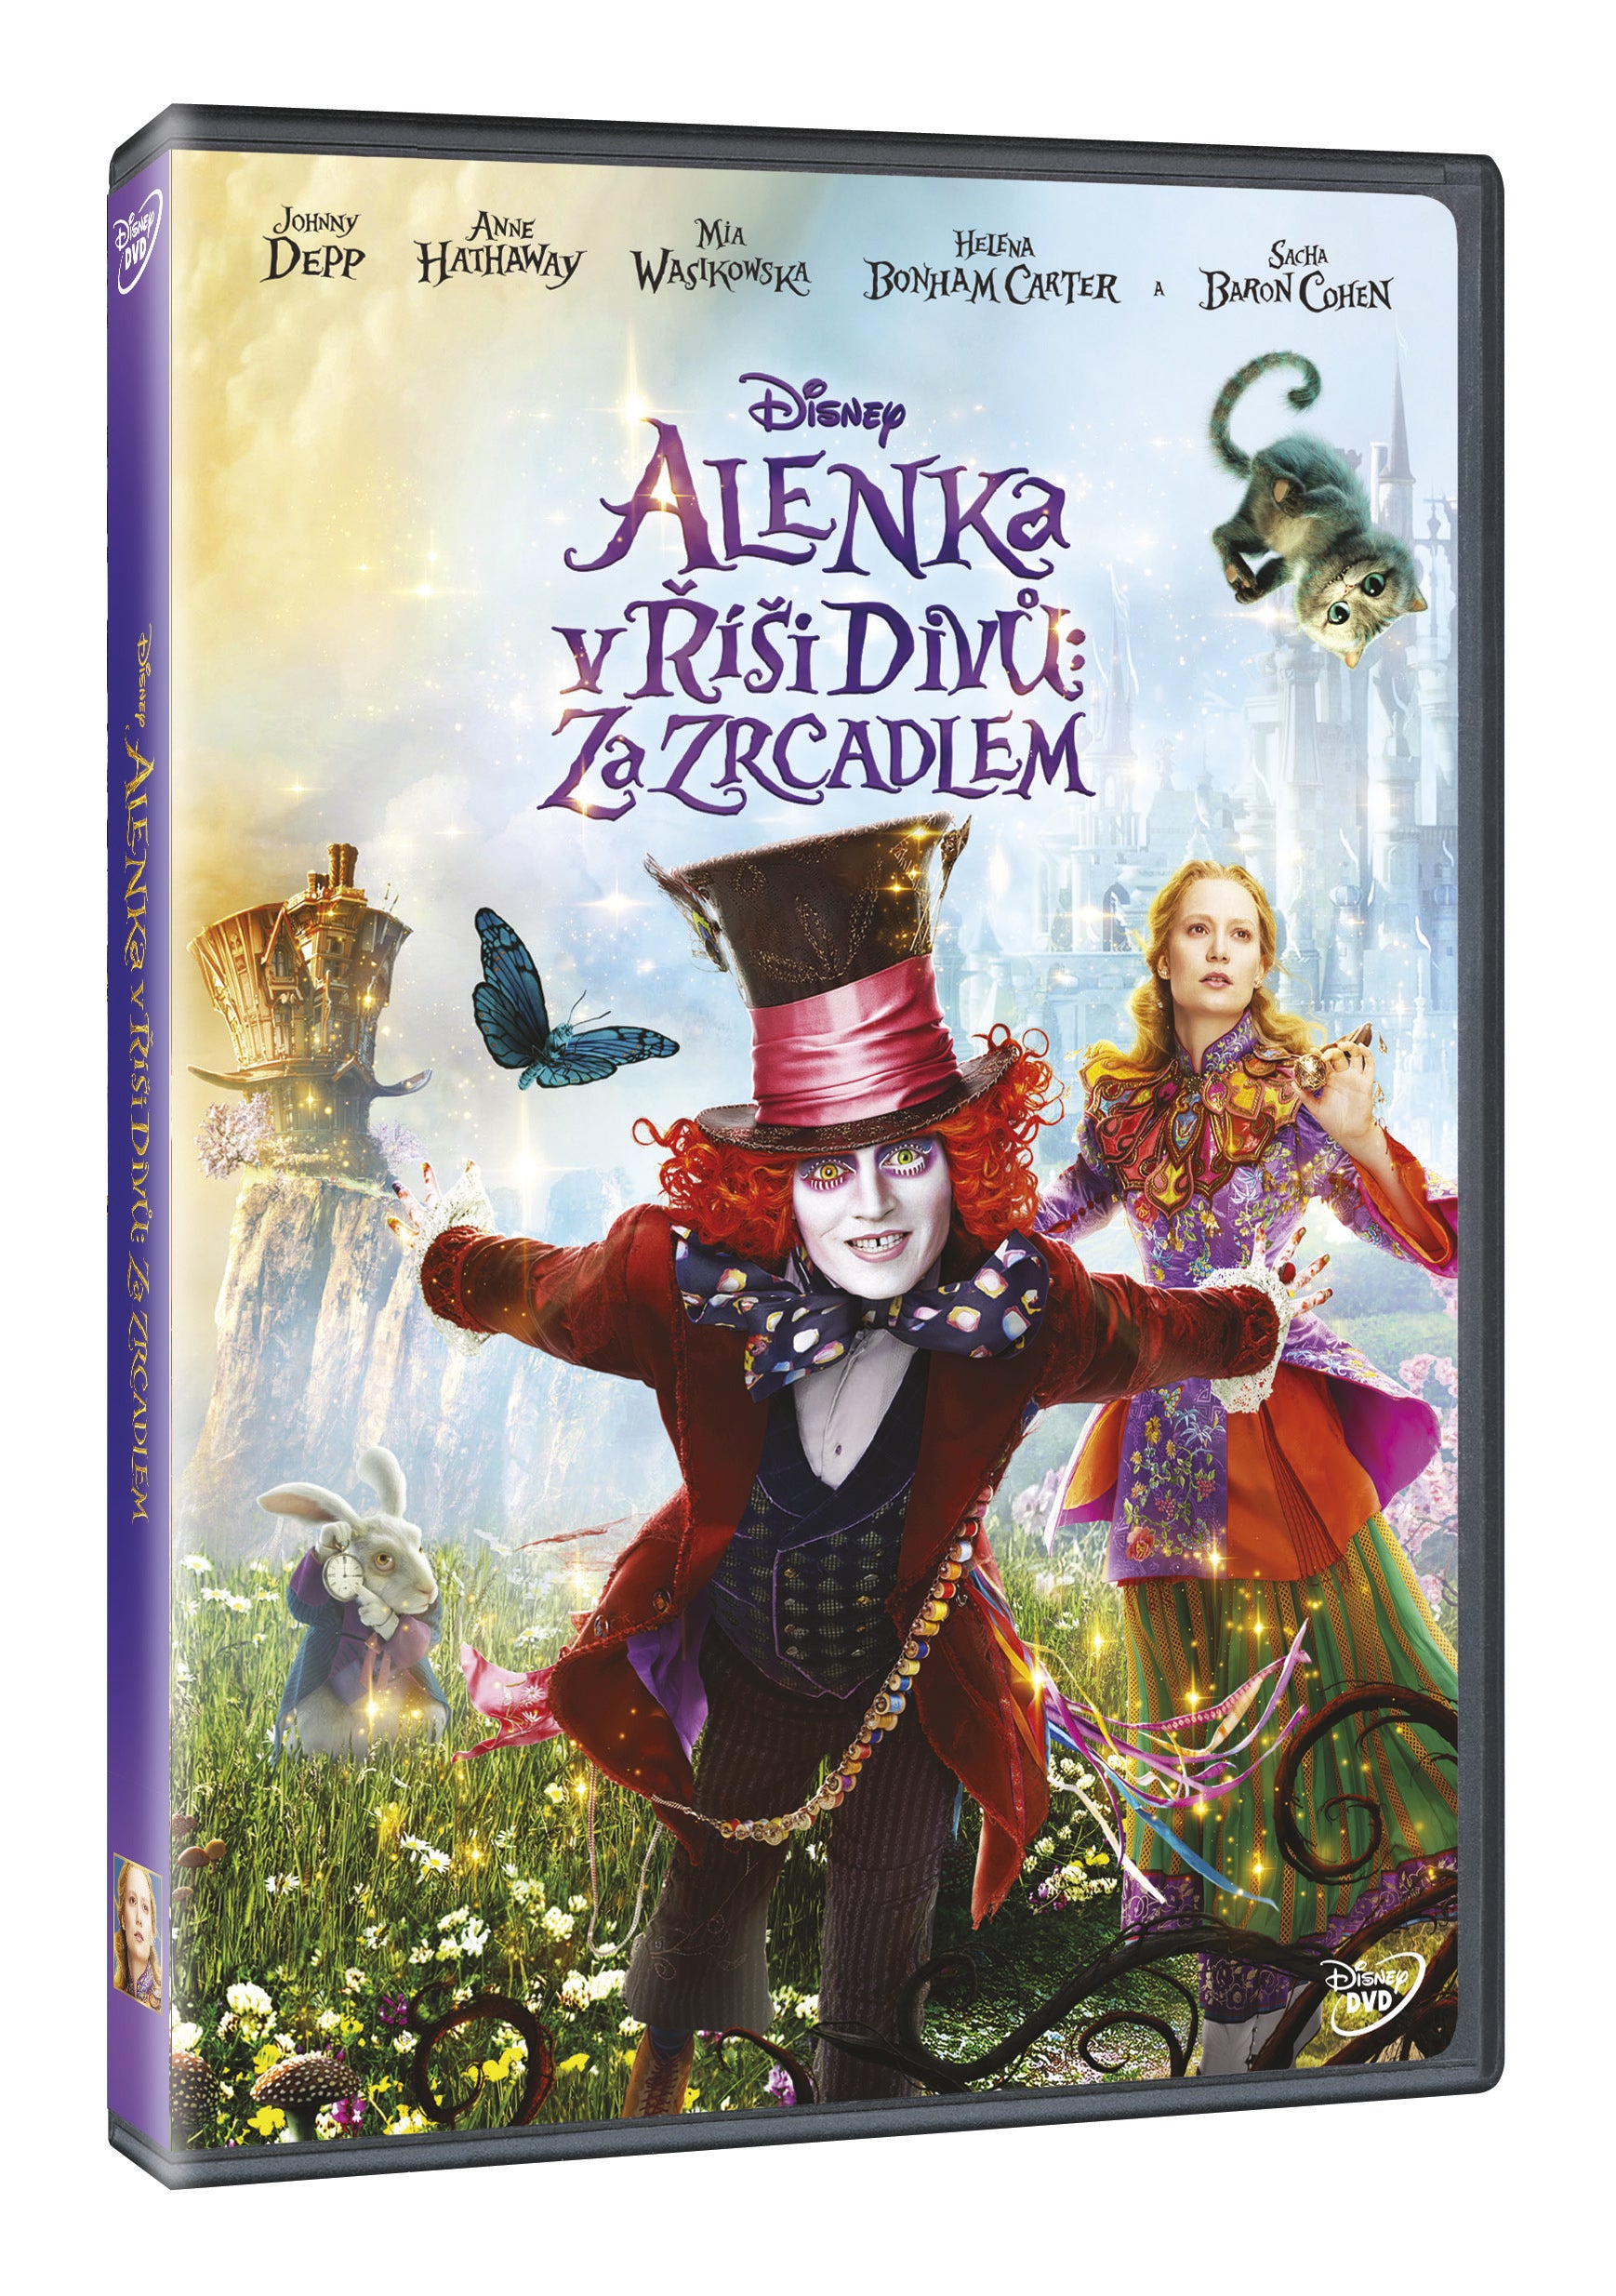 Alenka v risi divu: Za zrcadlem DVD / Alice Through the Looking Glass